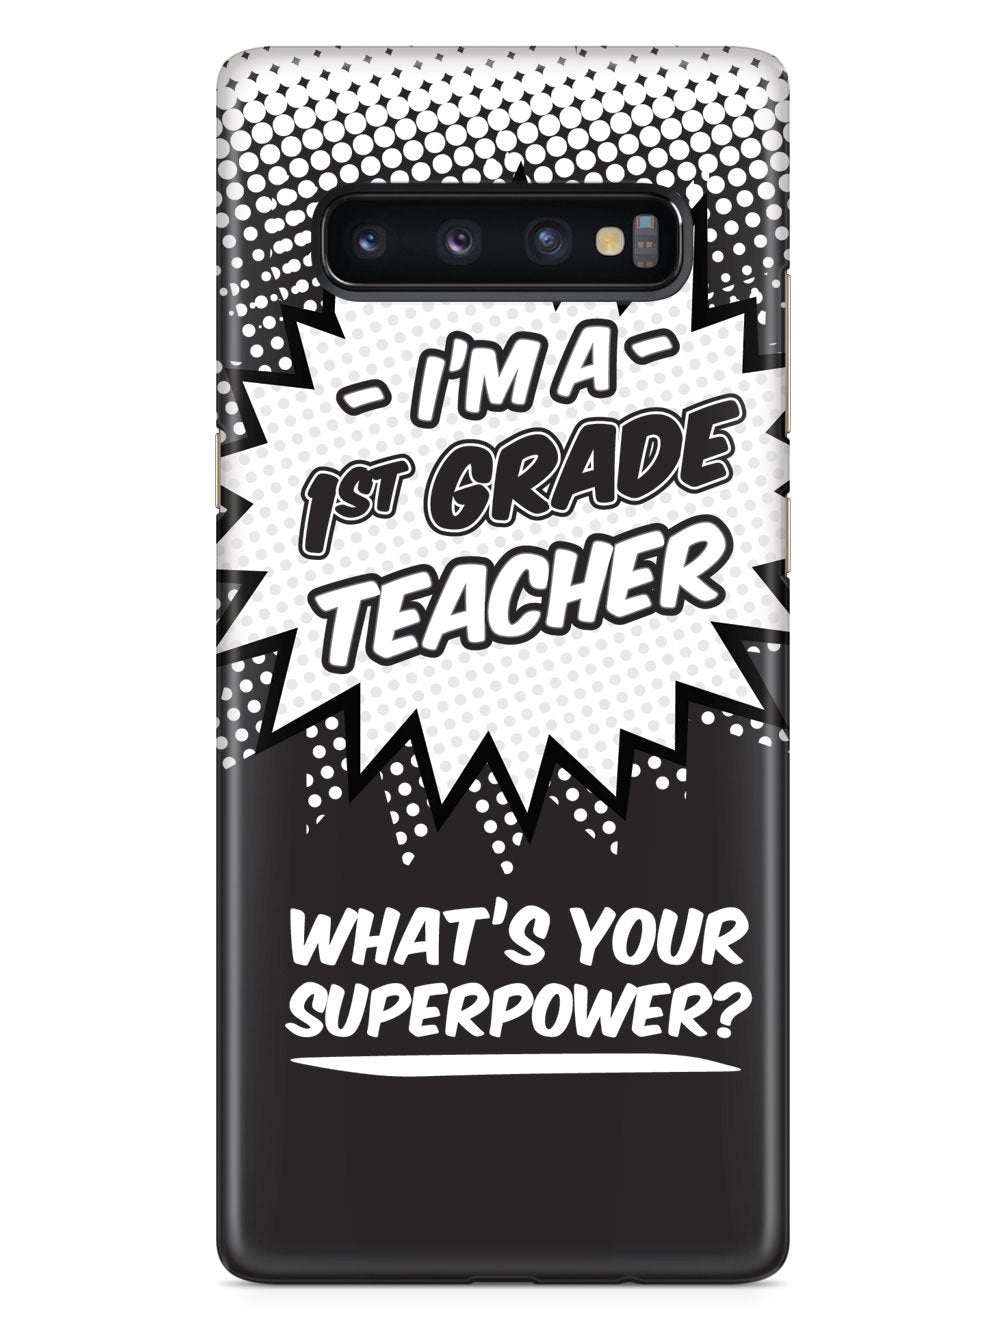 1st Grade Teacher - What's Your Superpower? Case